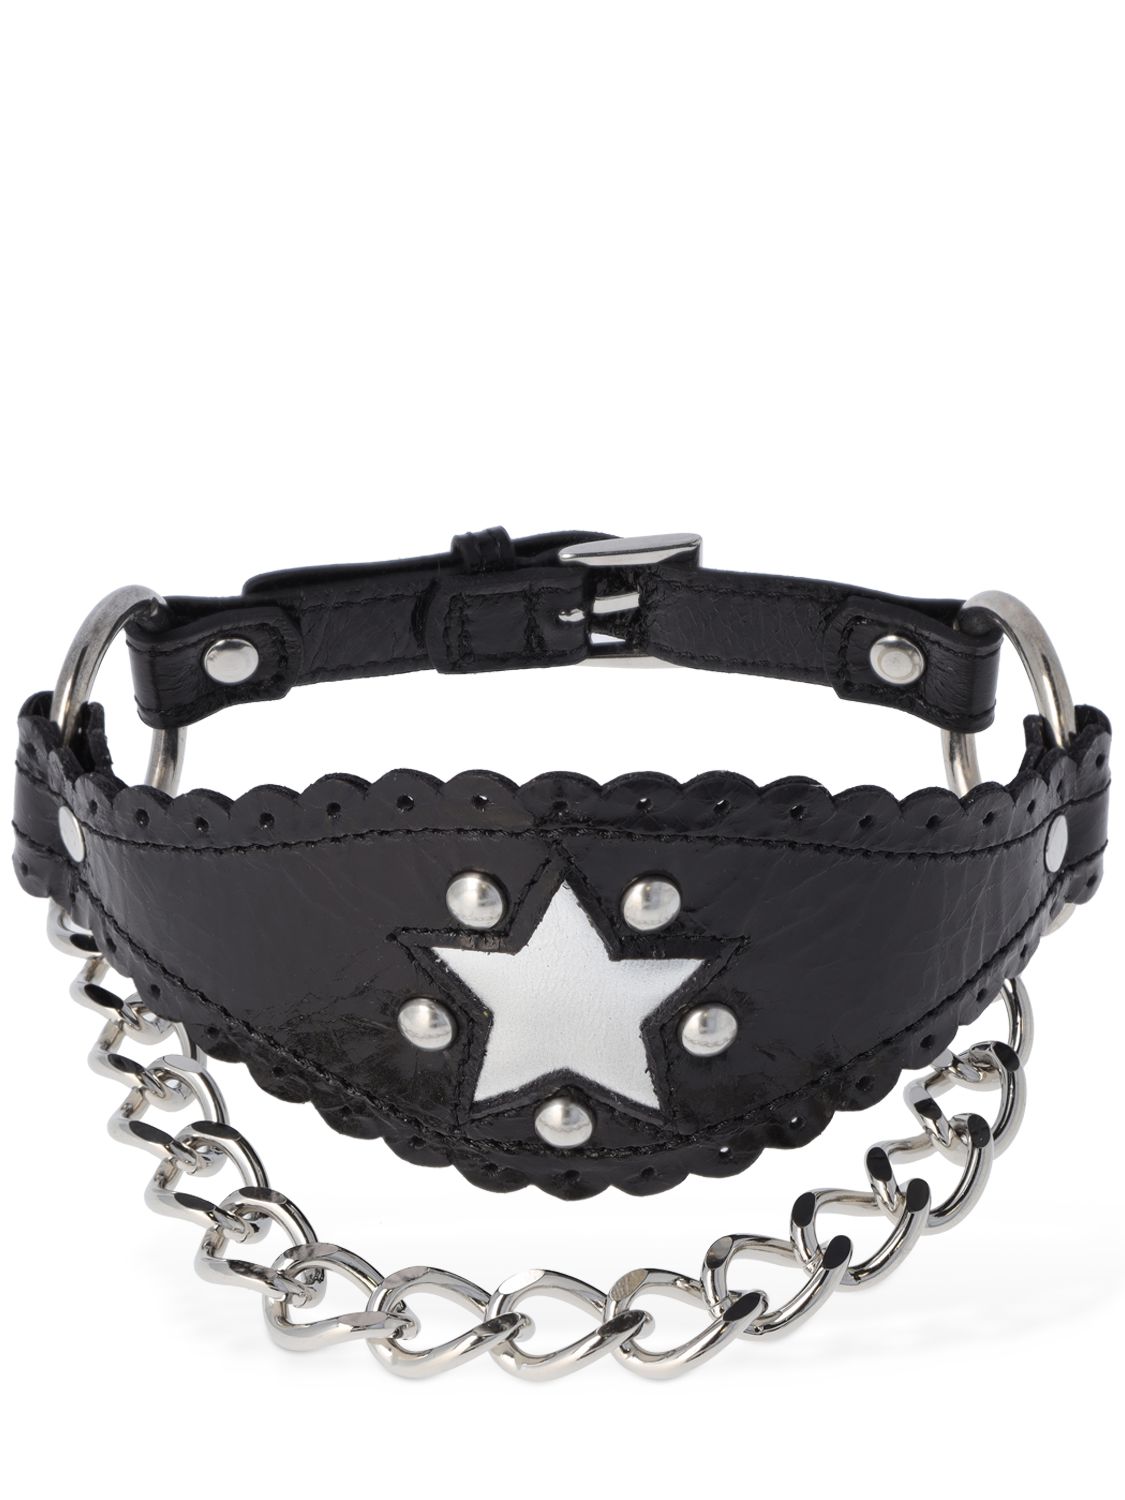 Leather Choker W/ Star & Chain